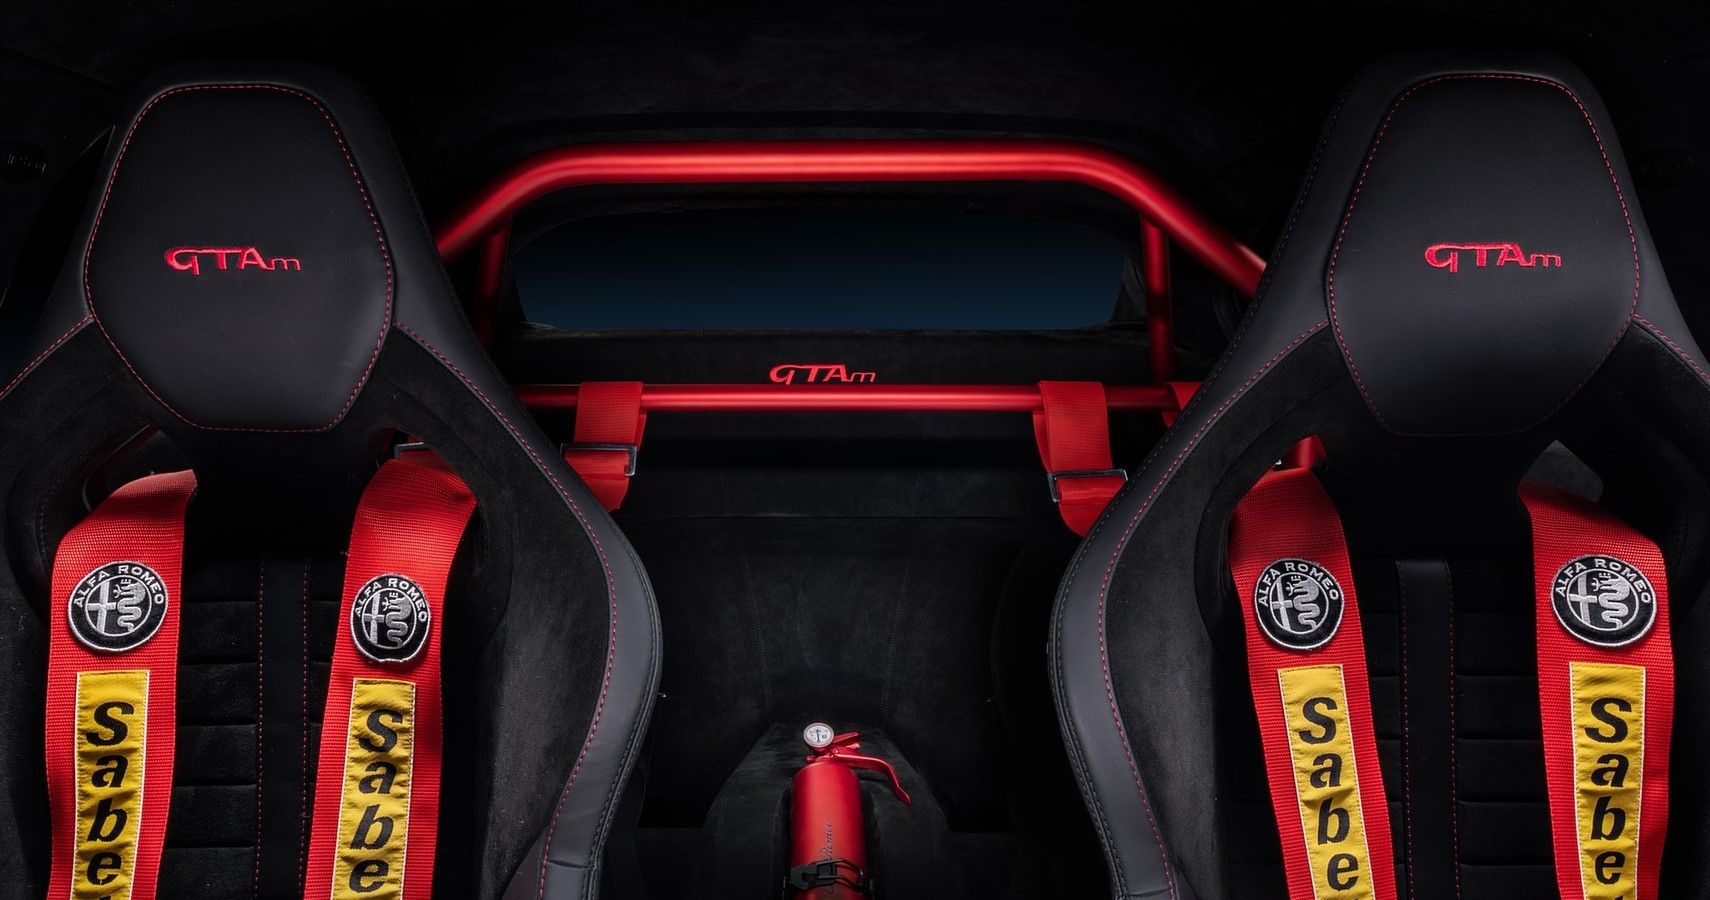 2021 Alfa Romeo Giulia GTAm interior rear view